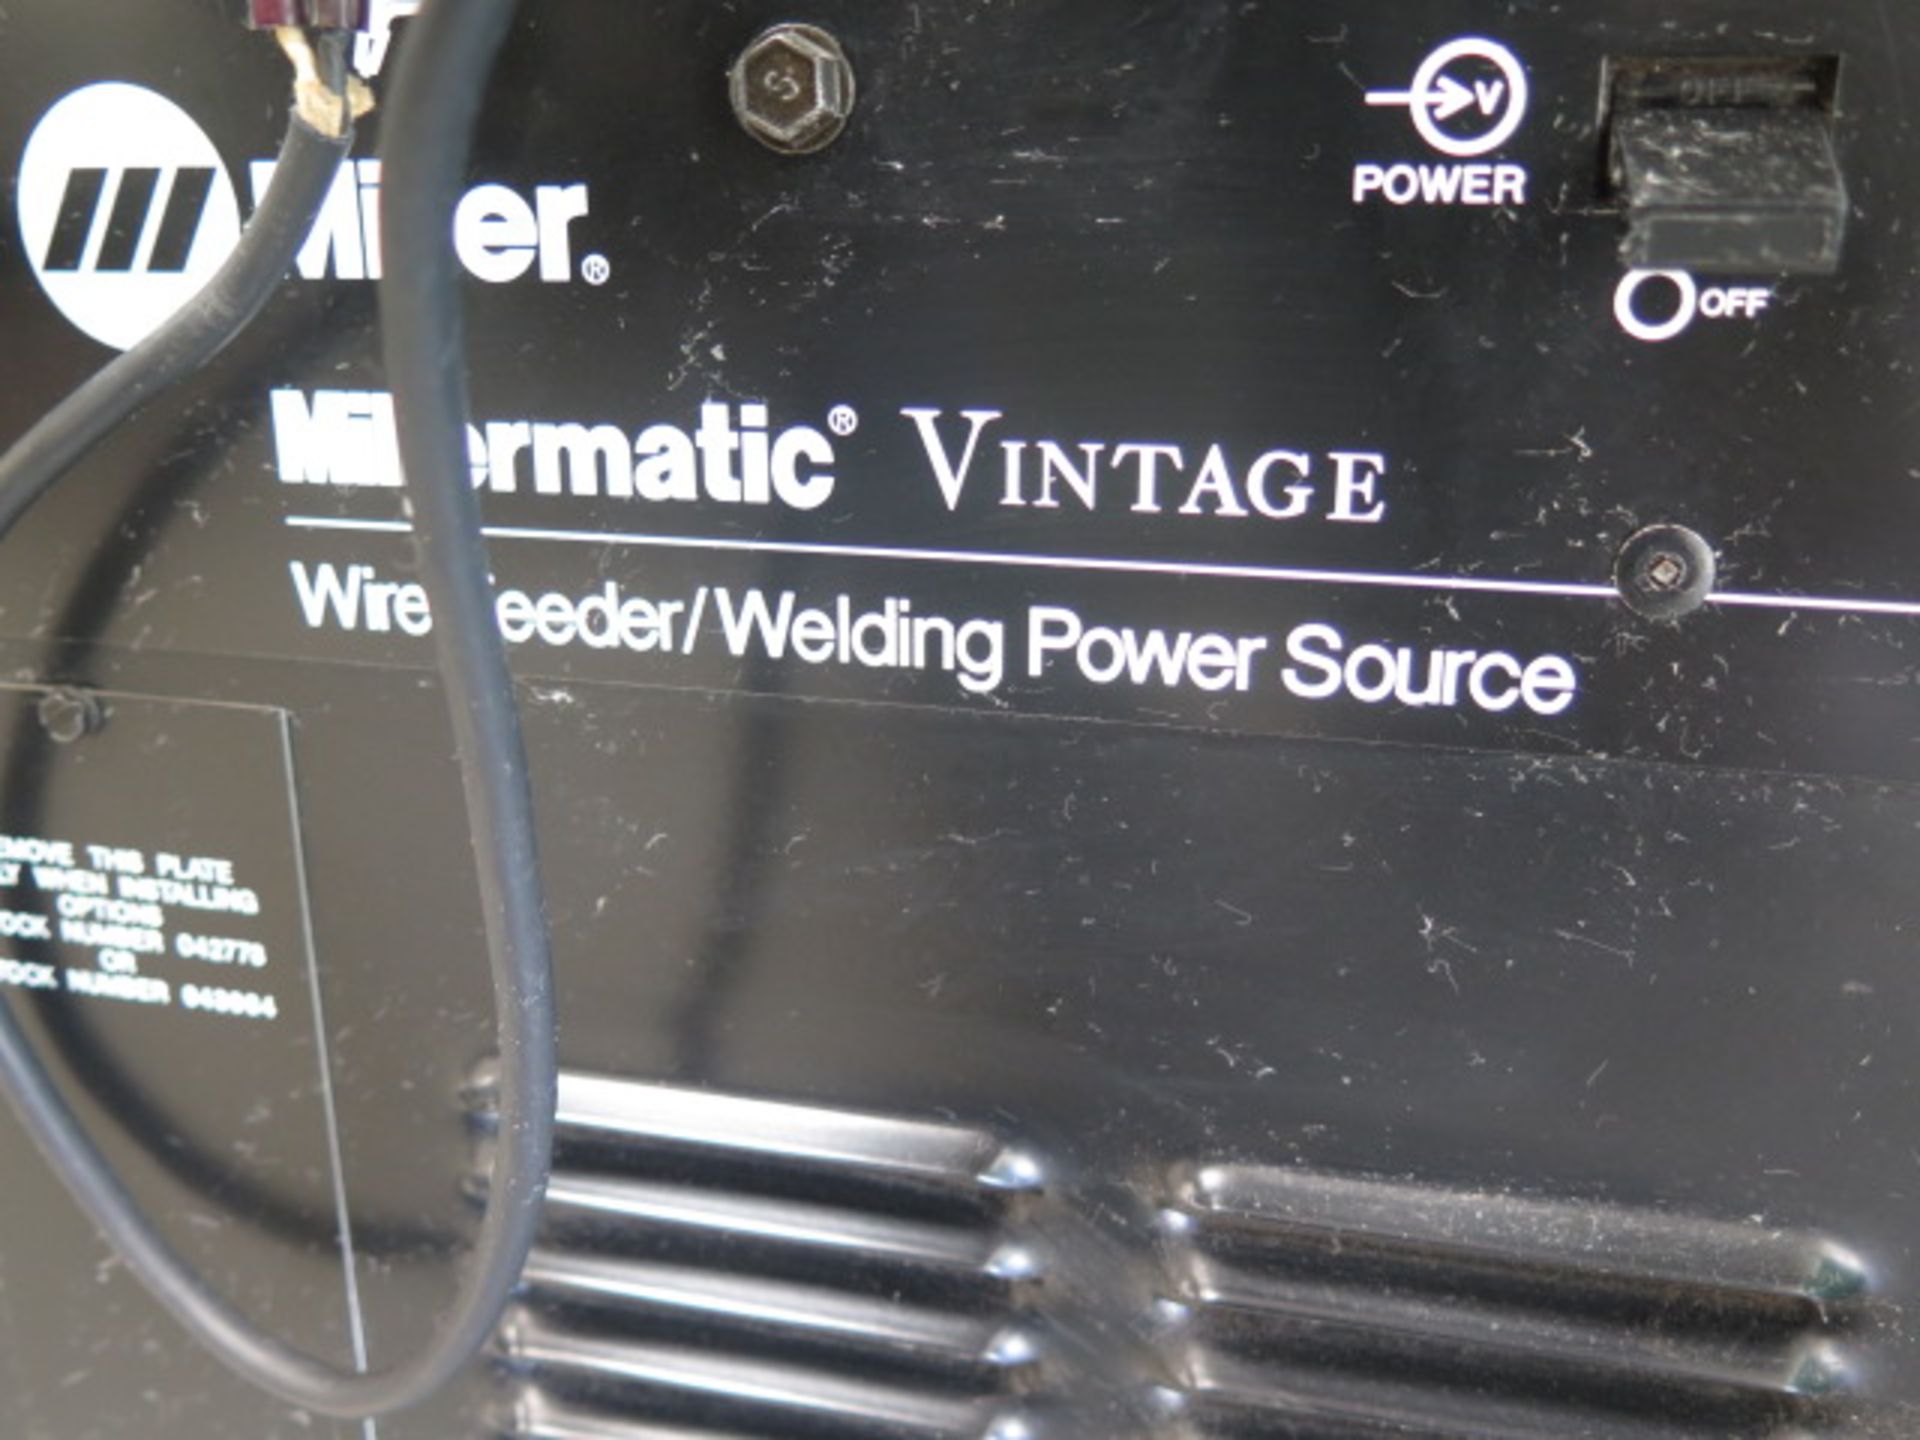 Miller Millermatic Vintage 200 Amp CV-DC Arc Welding Power Source and Wire Feeder s/n KF846664 w/ - Image 3 of 3